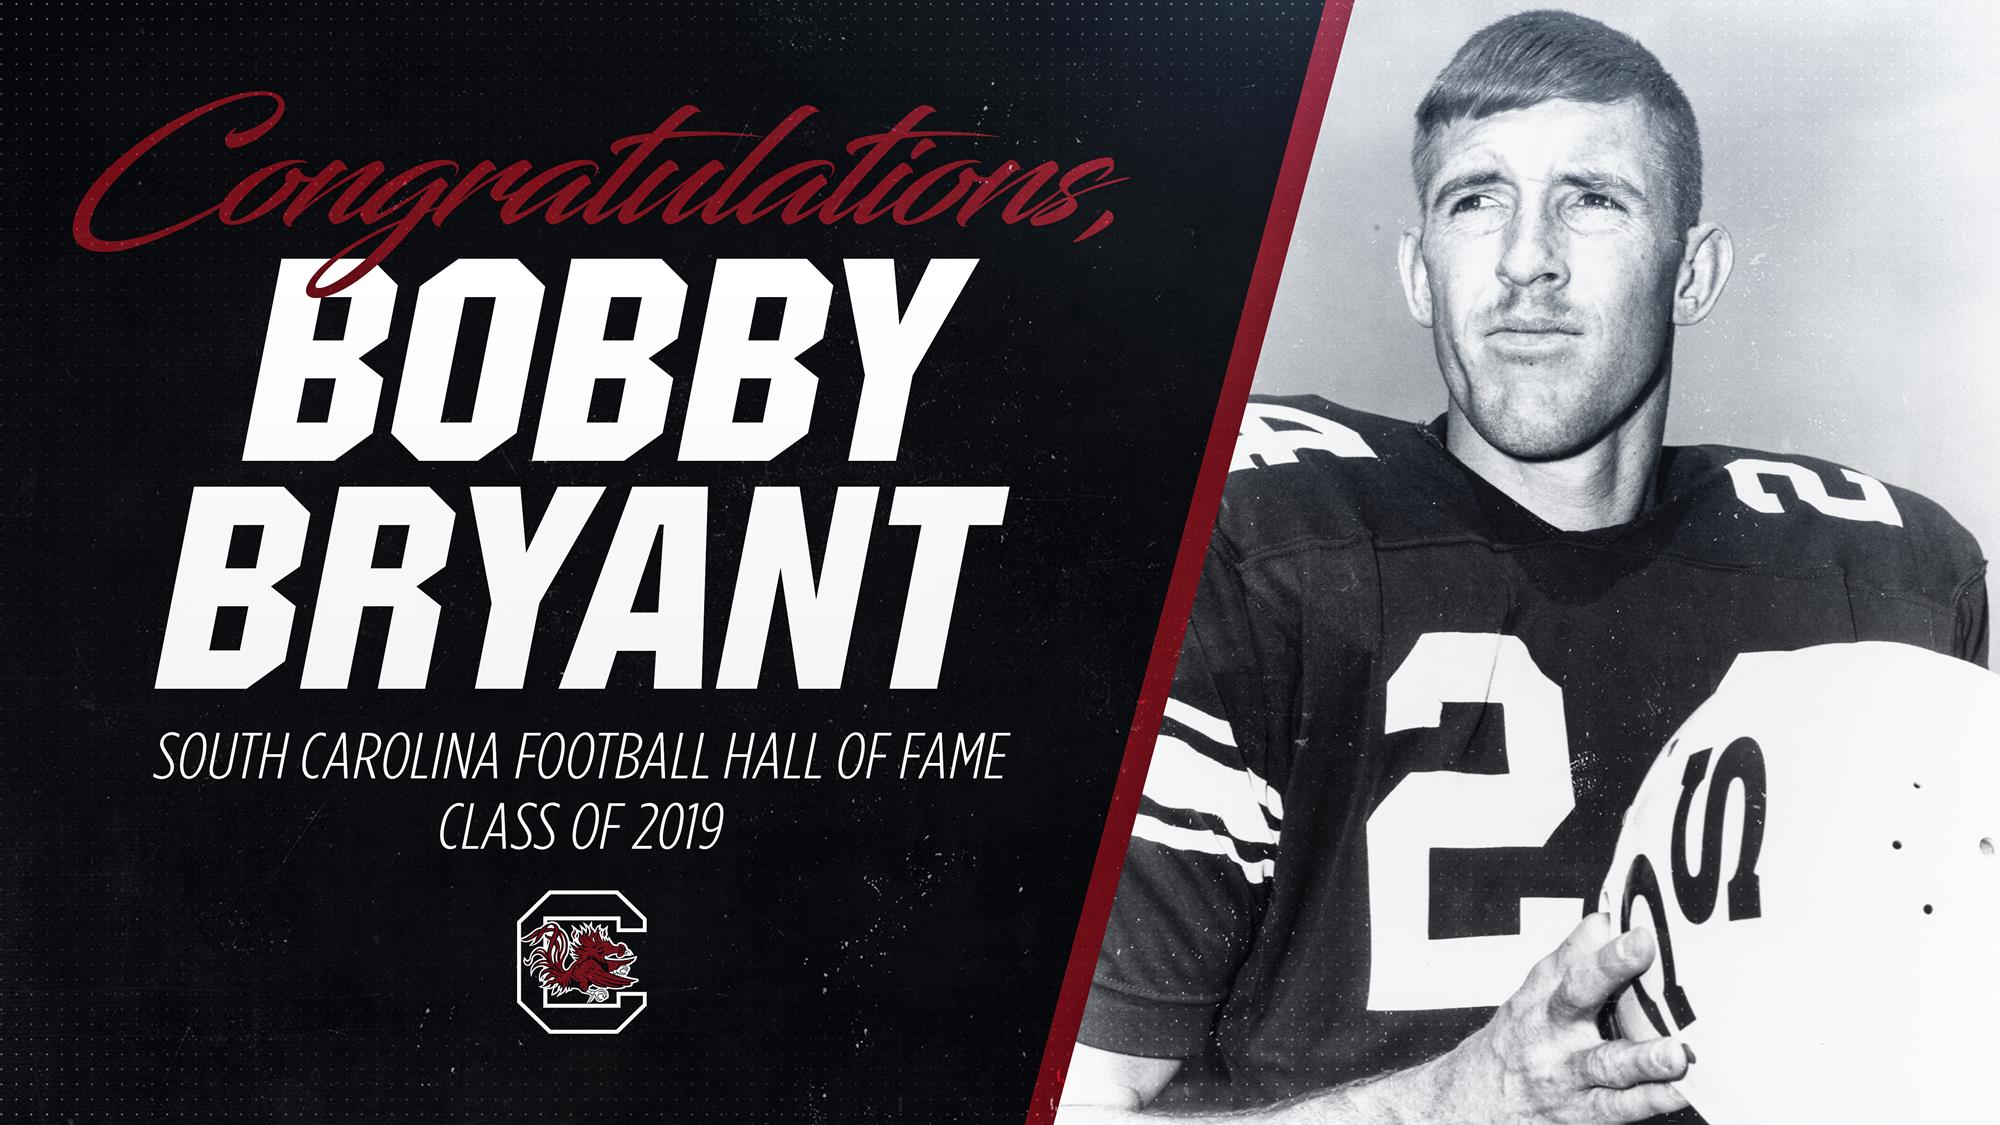 Bobby Bryant Named to SCFHOF Class of 2019